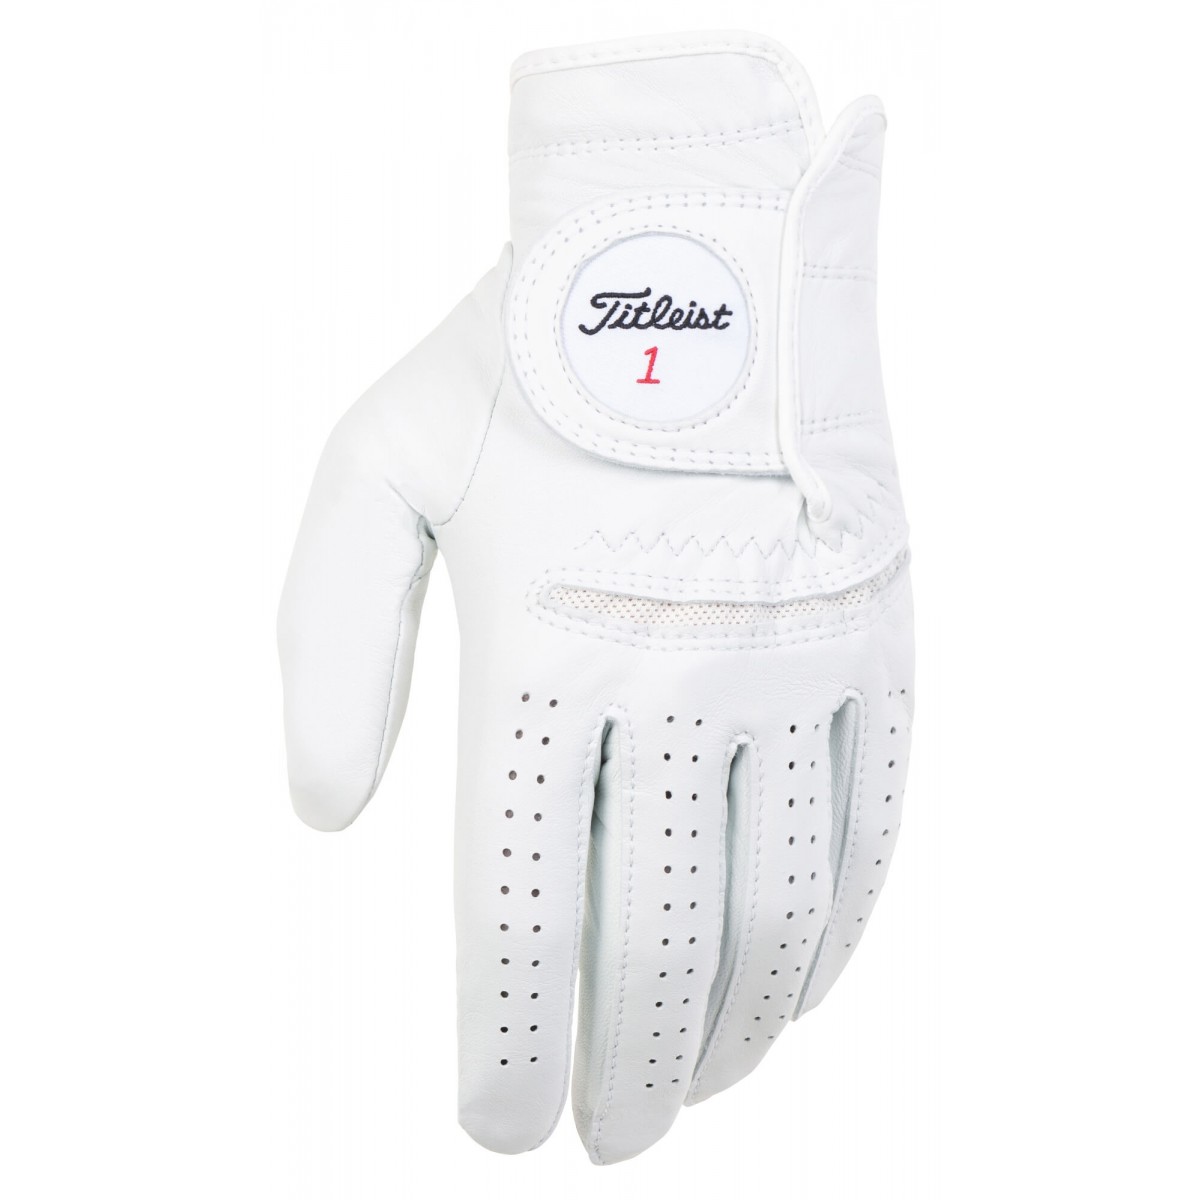 Titleist 2020 Perma-Soft Golf Glove - Left Hand Regular